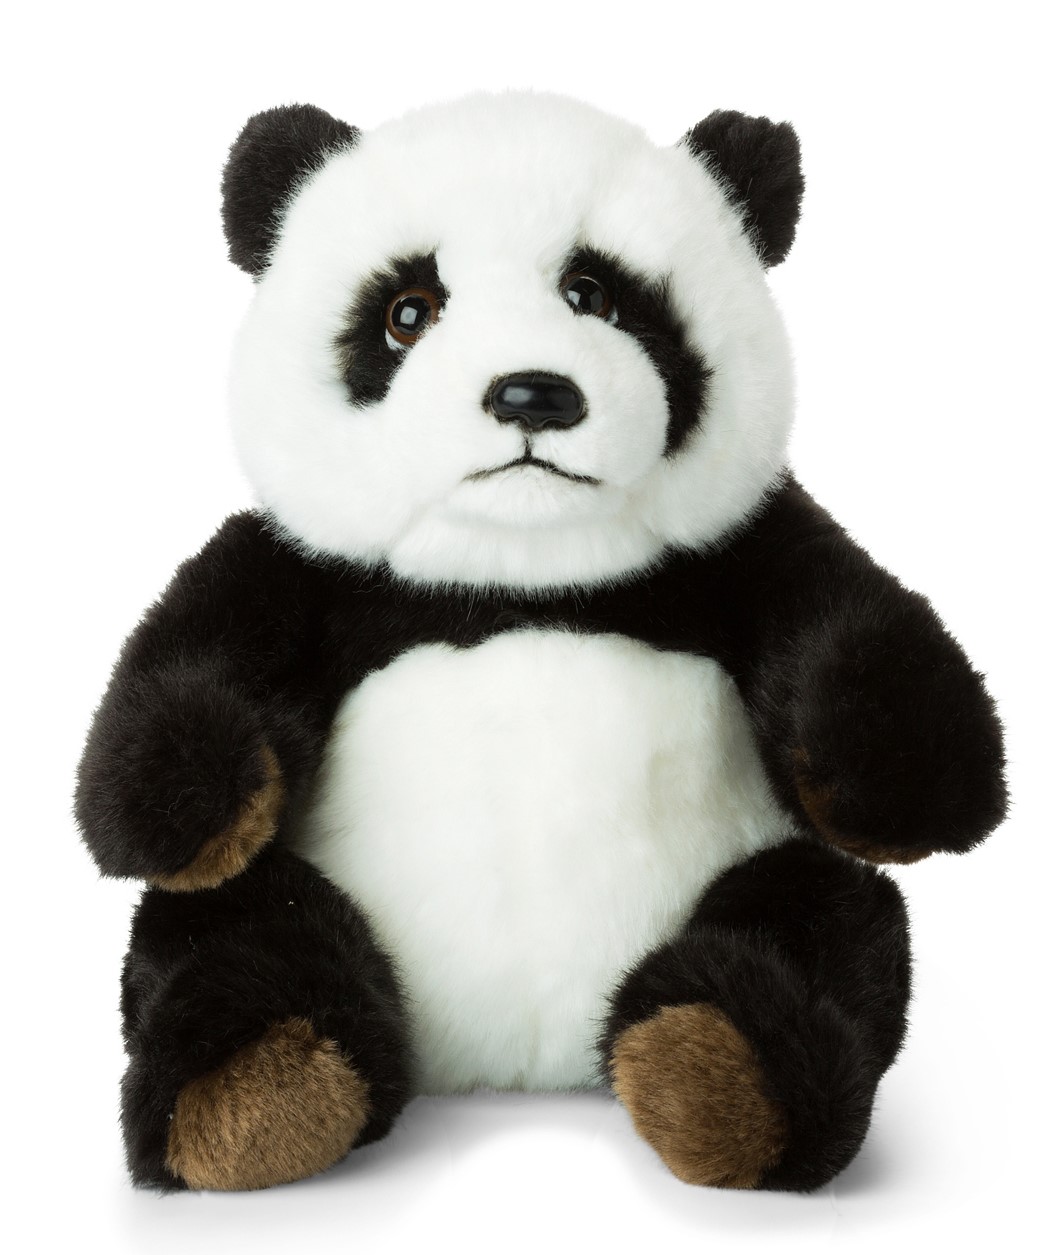 WWF (Vrldsnaturfonden) Panda - WWF (Vrldsnaturfonden)